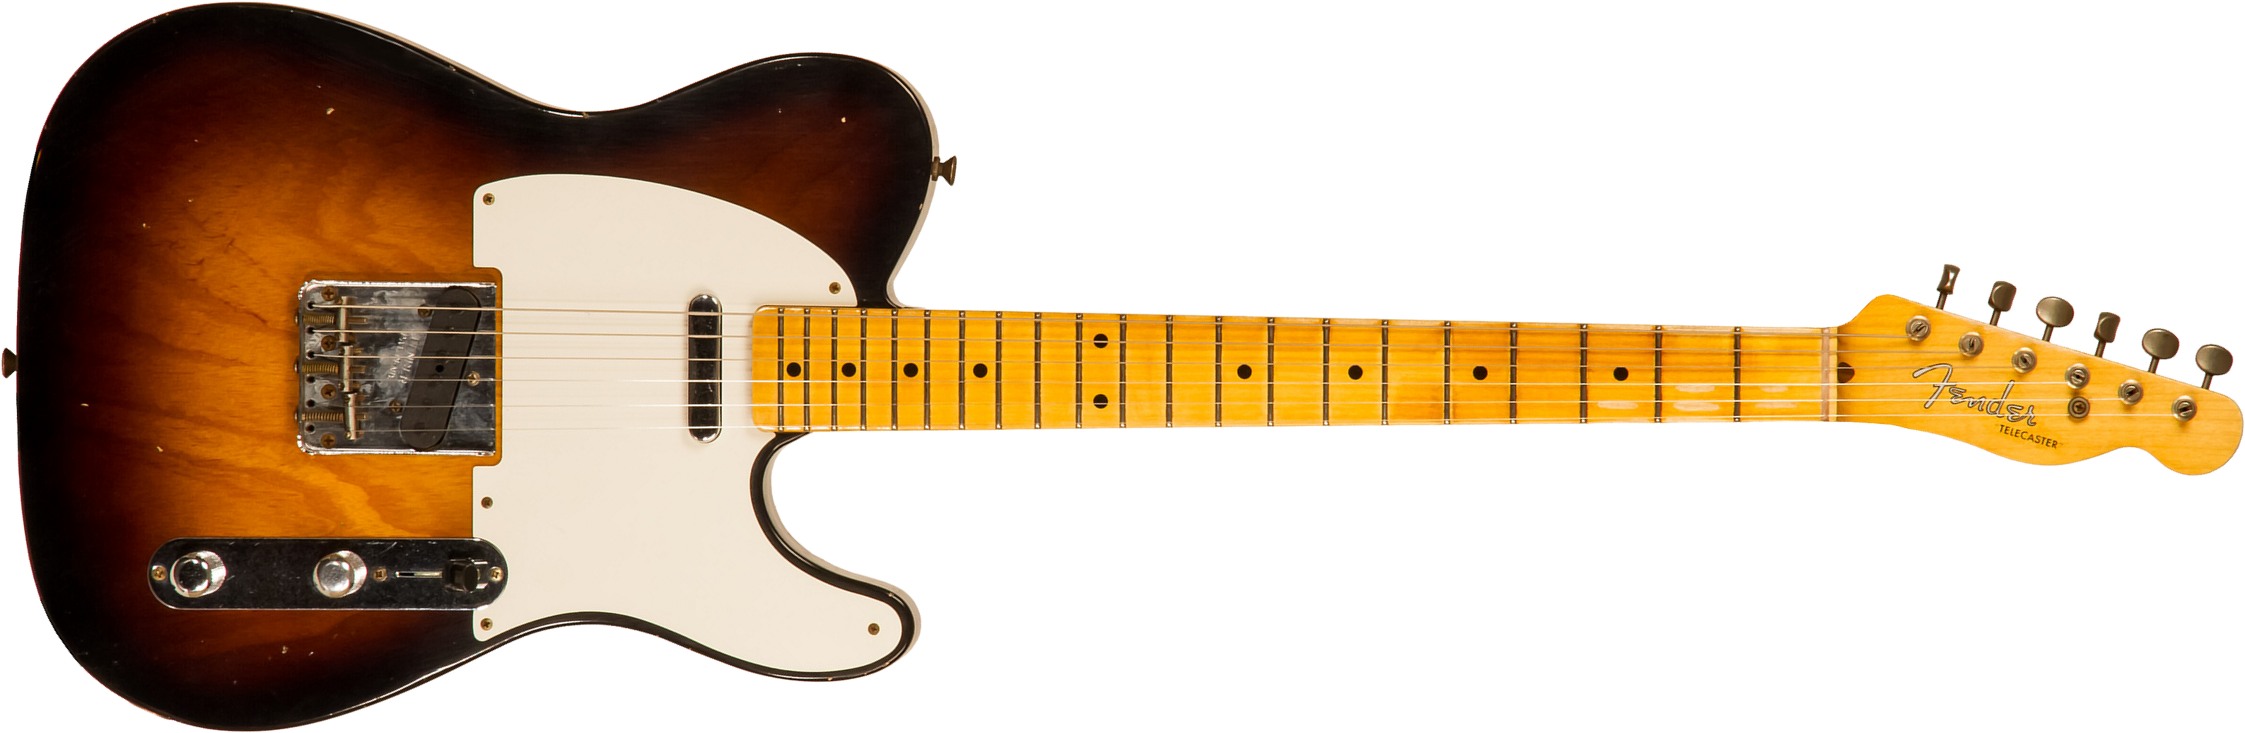 Fender Custom Shop Tele 1955 Ltd 2s Ht Mn #cz560649 - Relic Wide Fade 2-color Sunburst - Tel shape electric guitar - Main picture